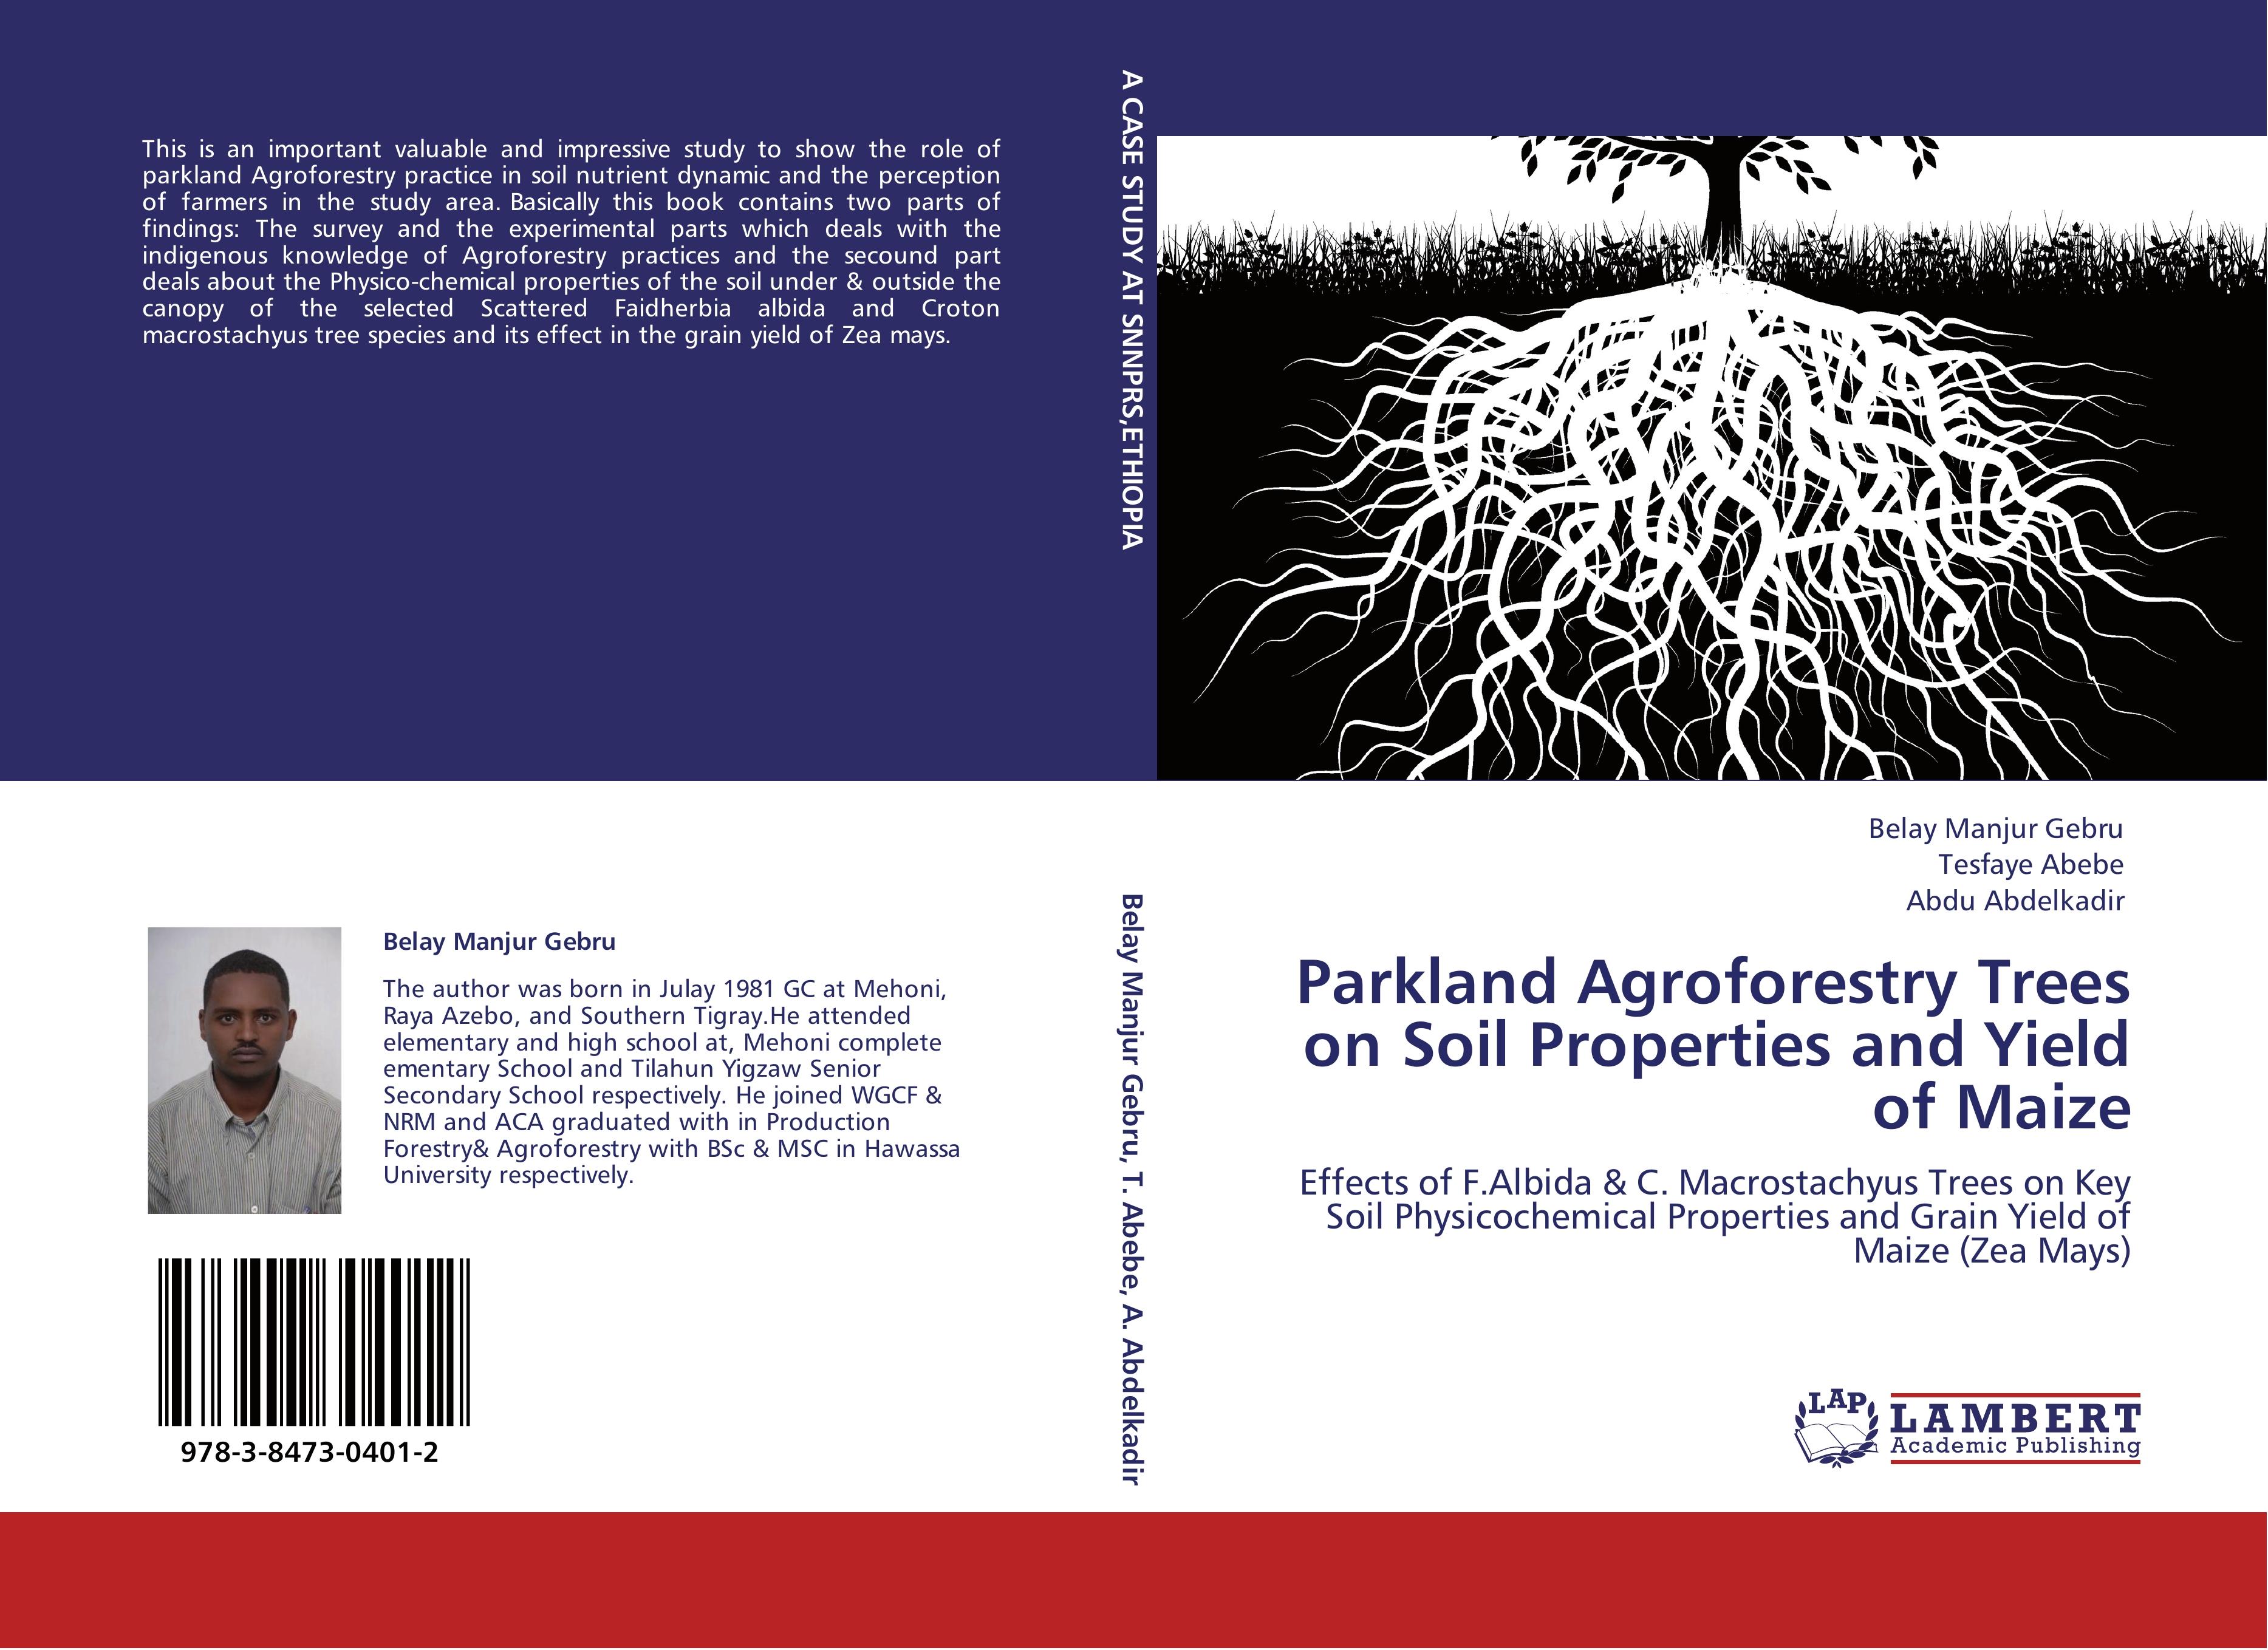 Parkland Agroforestry Trees on Soil Properties and Yield of Maize - Belay Manjur Gebru TESFAYE ABEBE Abdu Abdelkadir